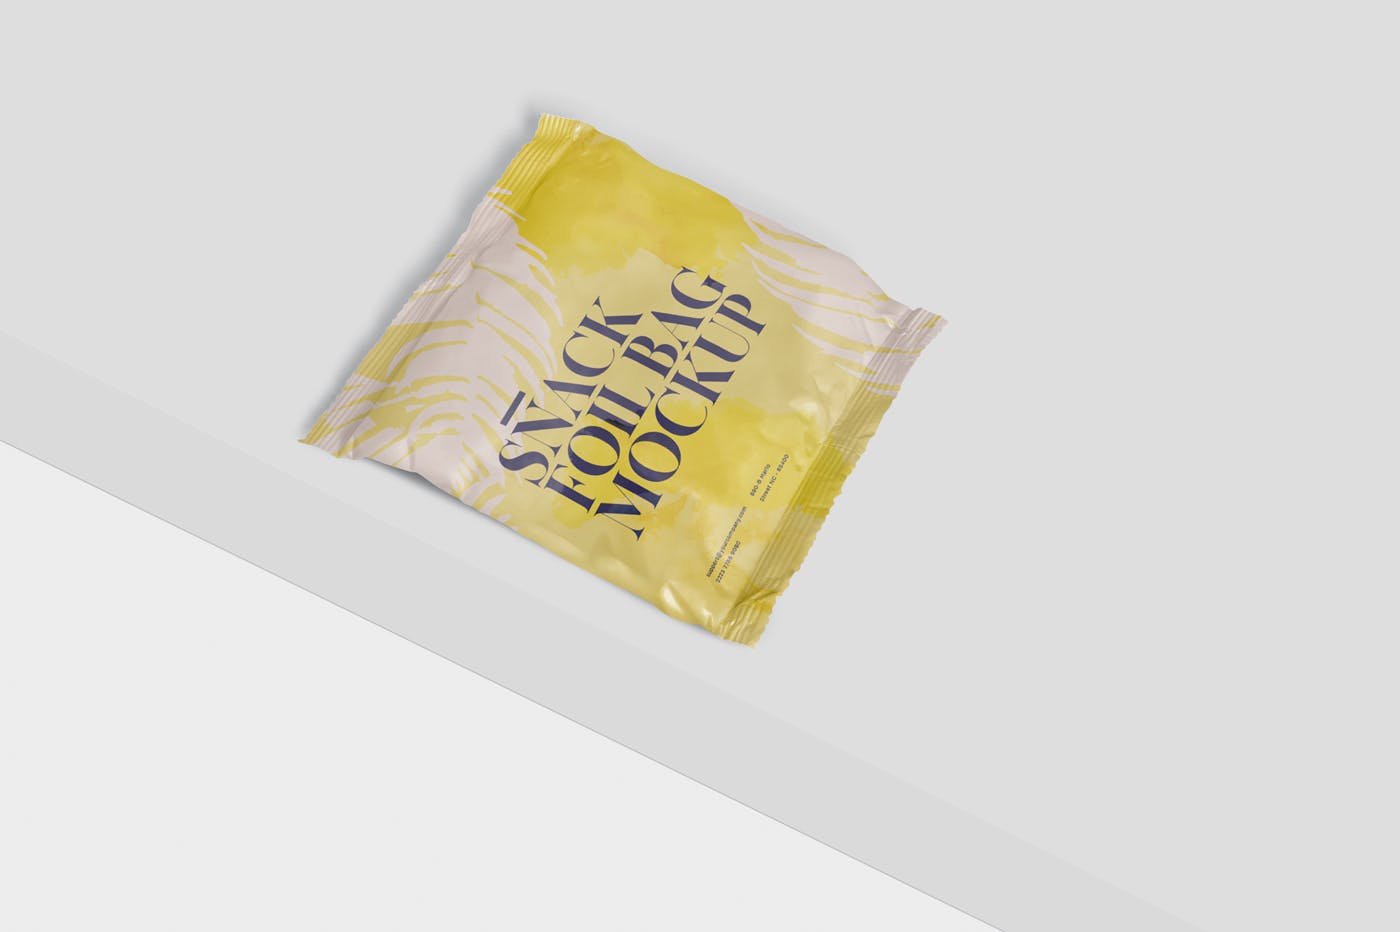 小吃零食铝箔包装袋设计图素材中国精选 Snack Foil Bag Mockup – Square Size – Small插图(2)